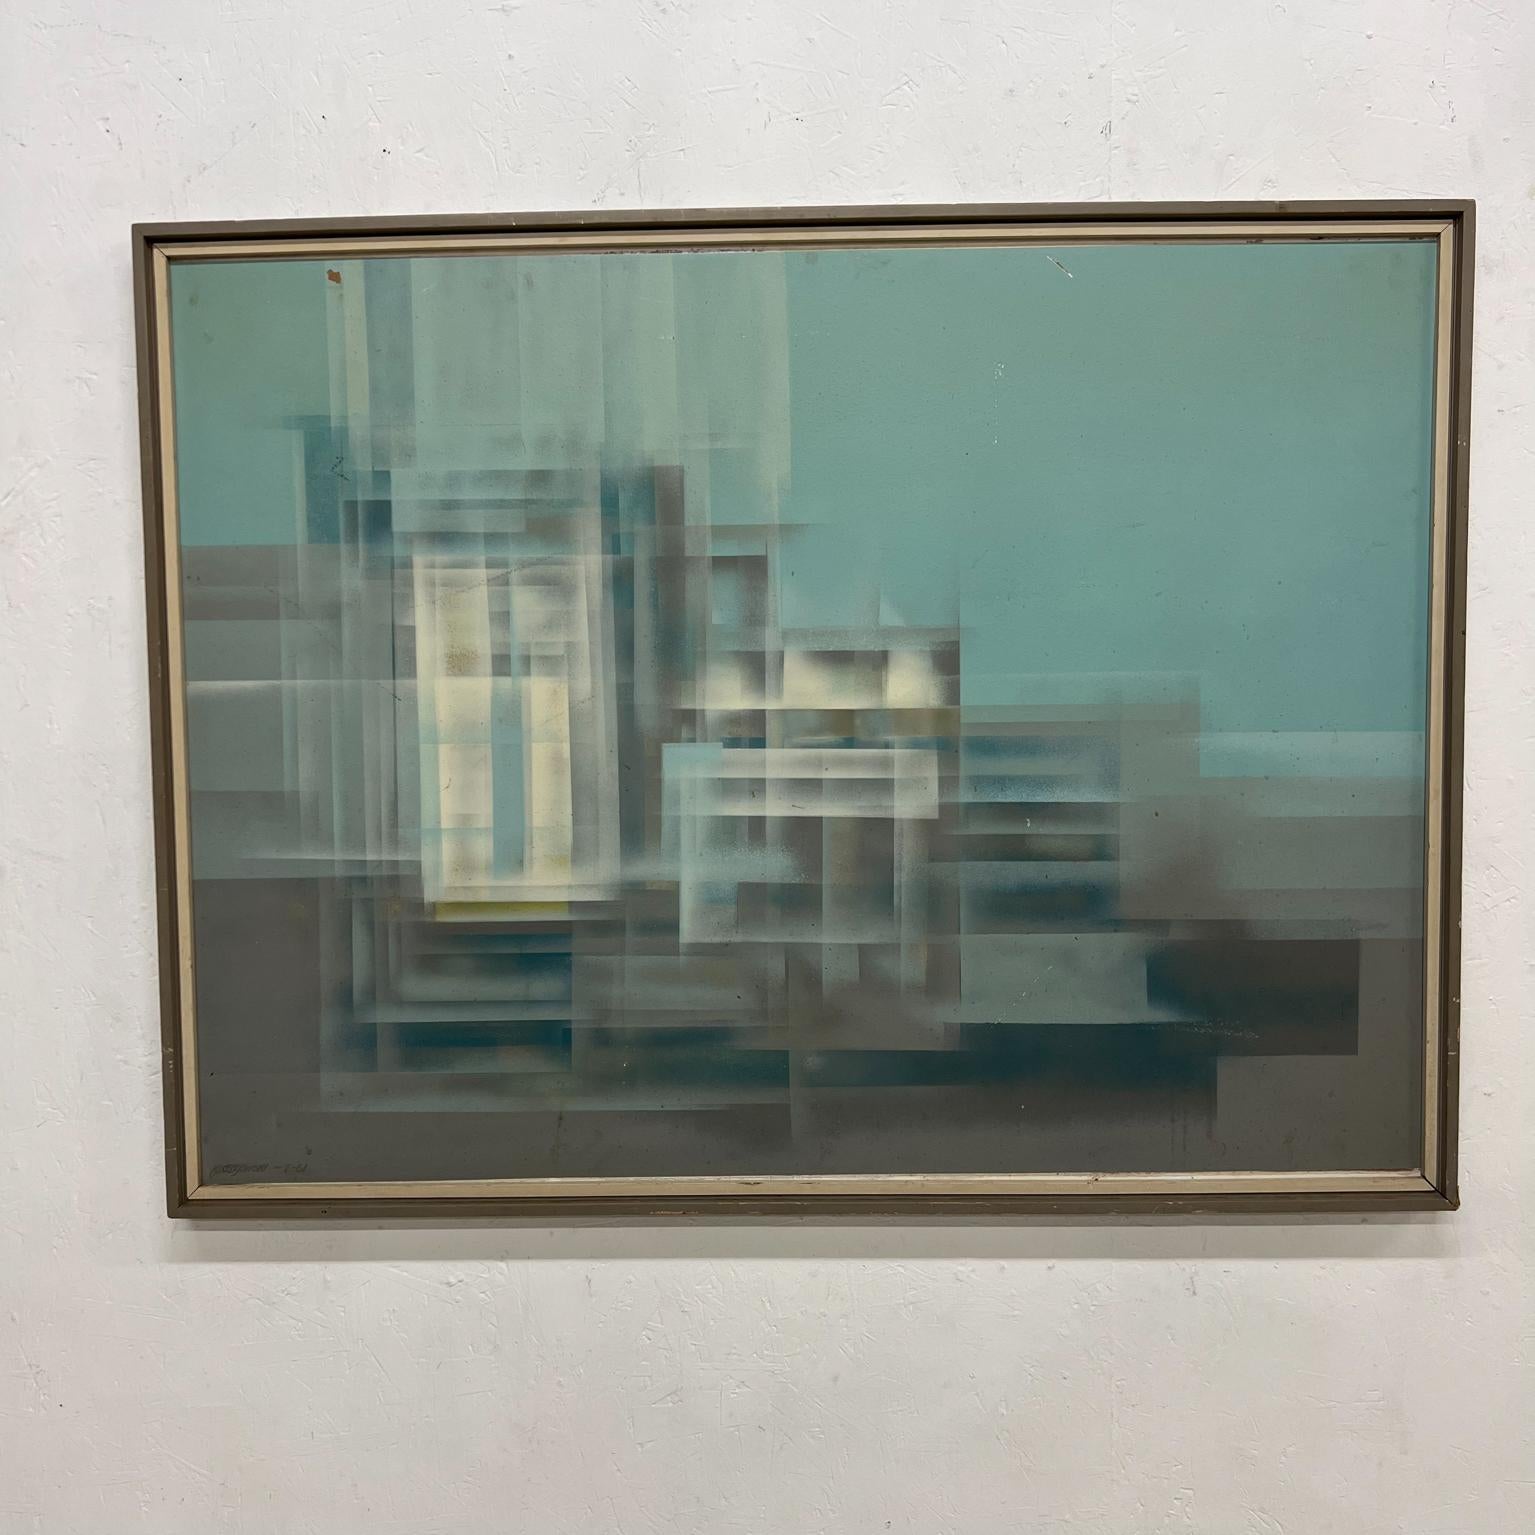 1961 Modern Art Fabulous Reflective Mirage Eugene Kloszewski Abstract Painting.
Eugene Kloszewski, Medium Lack auf Platte.
Eugene Kloszewski studierte am Cleveland Institute of Art und an der Yale University bei Josef Albers, der ihm ein